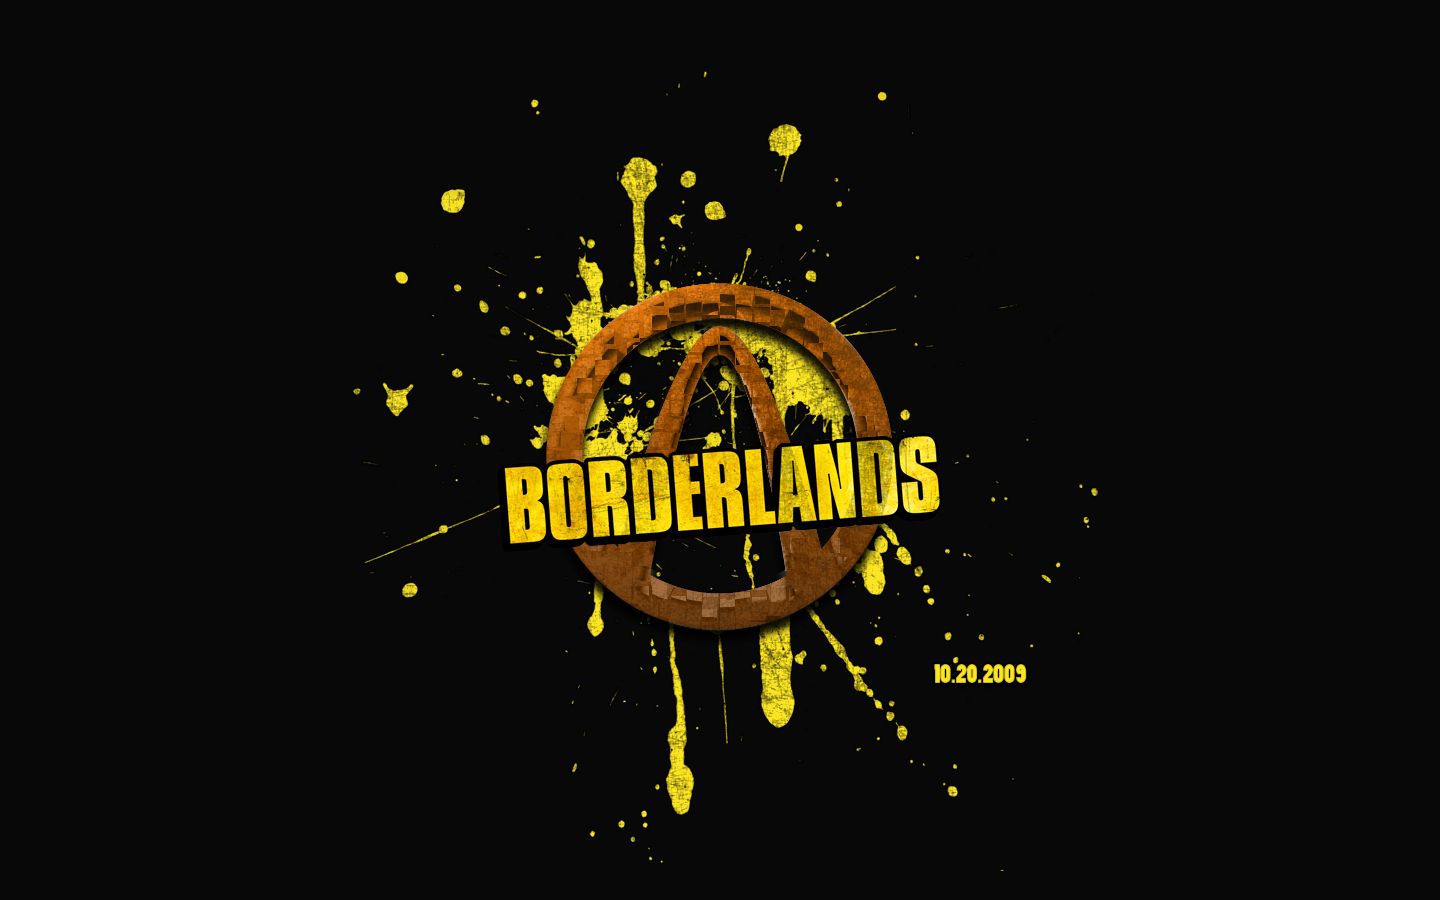 Borderlands - Borderlands 2 Wallpaper 34710561 - Fanpop